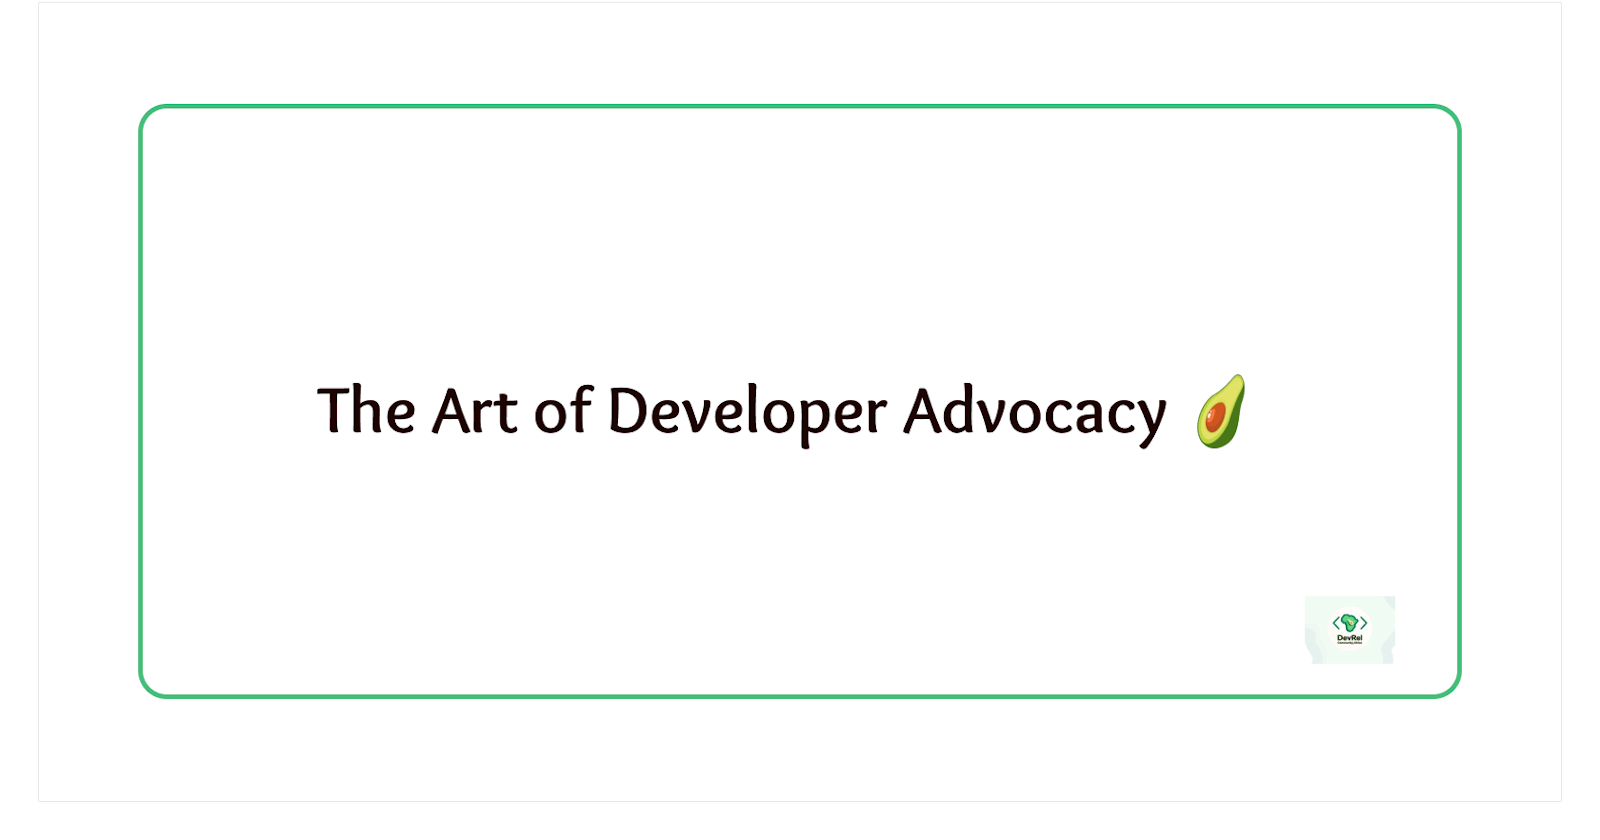 The Art of Developer Advocacy.